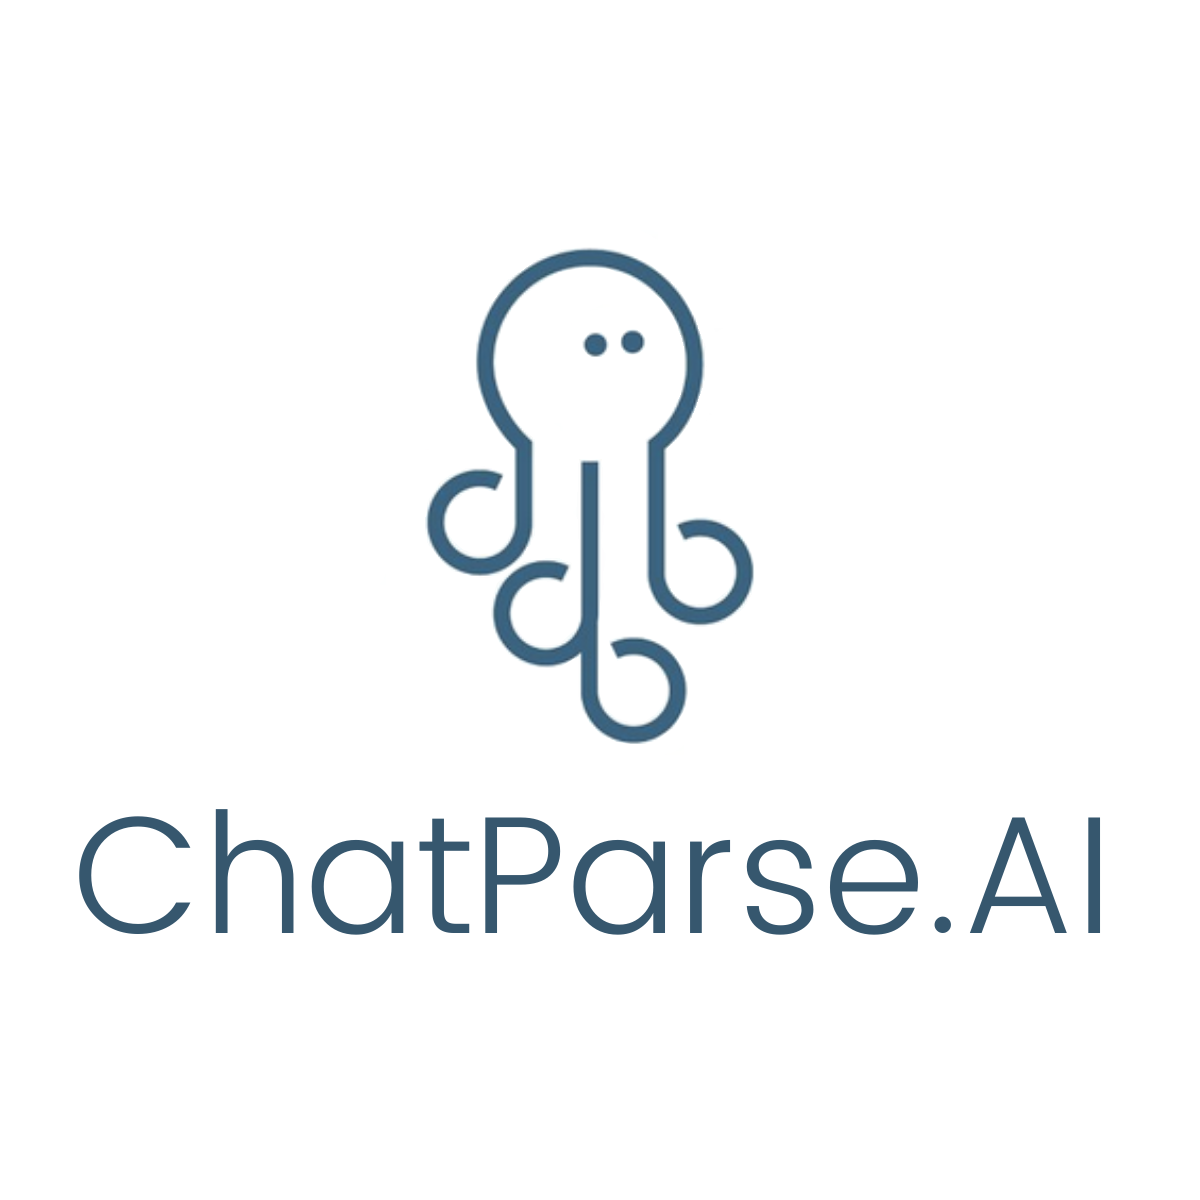 ChatParse.AI logo